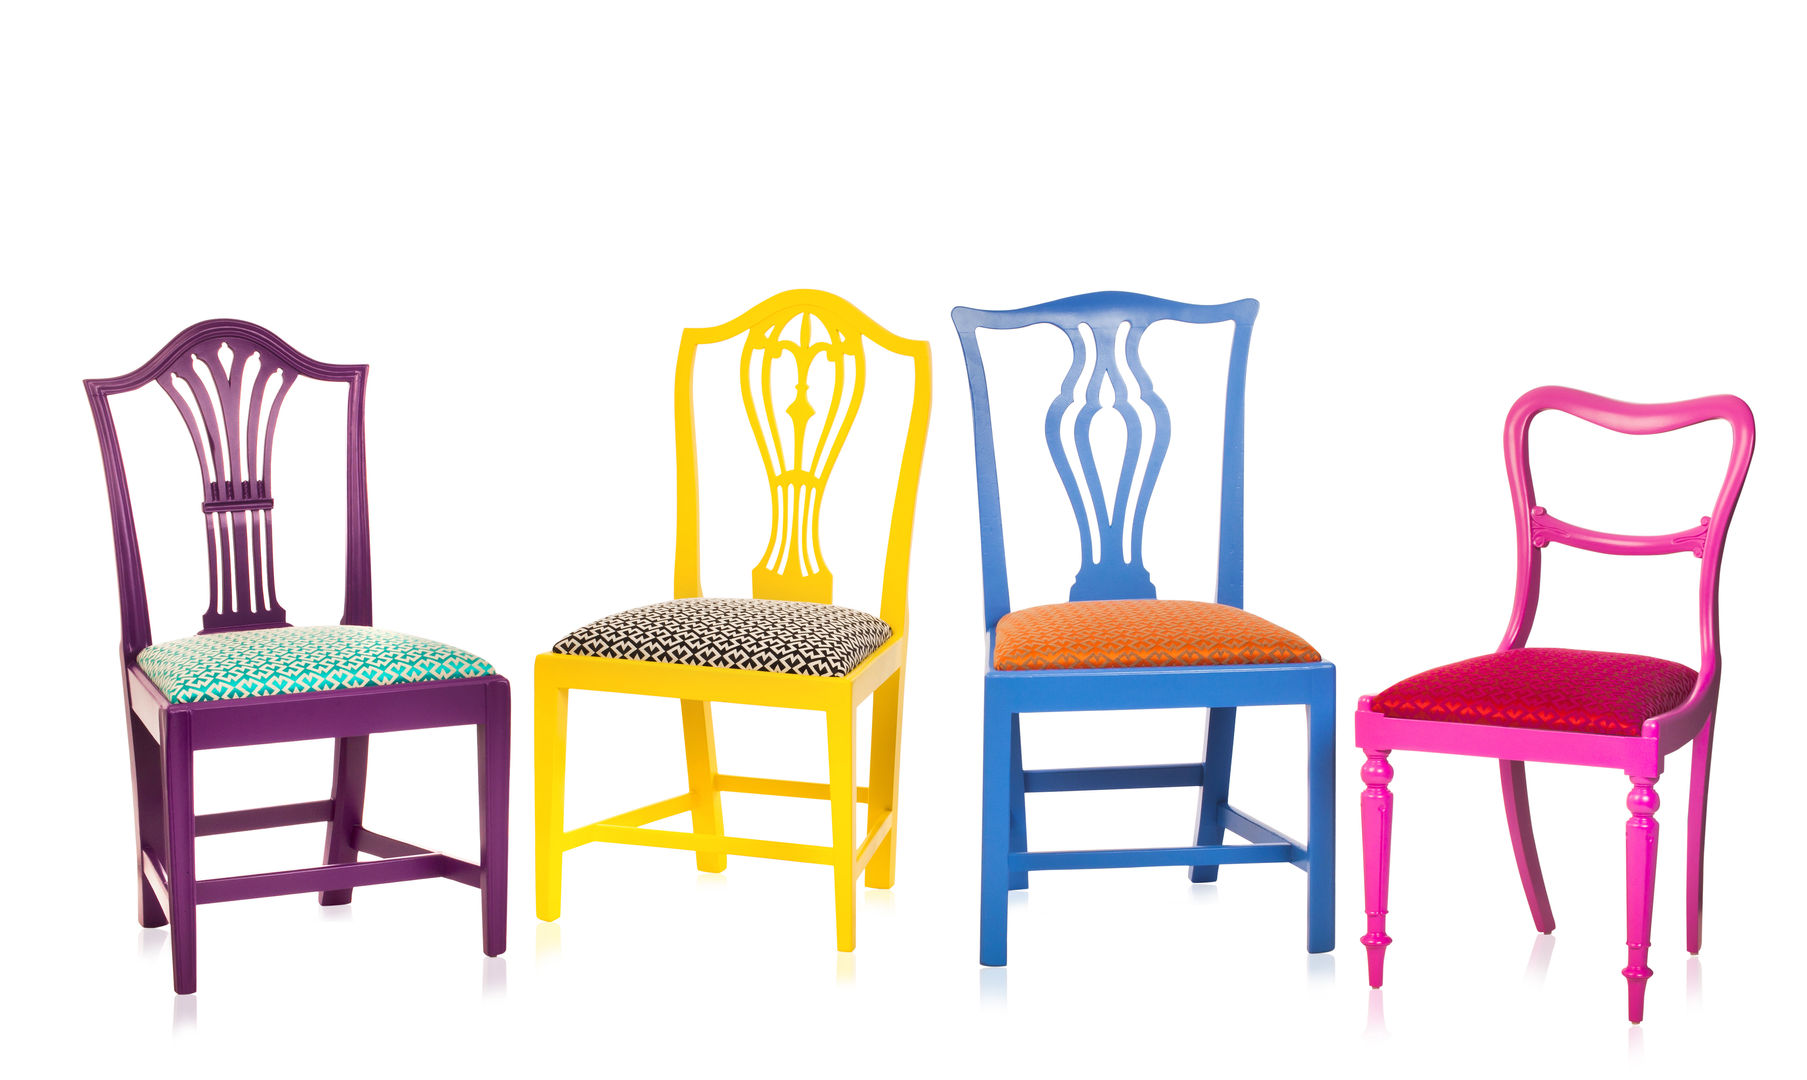 Klash Chairs Standrin غرفة السفرة خشب نقي Multicolored كراسي ومقاعد